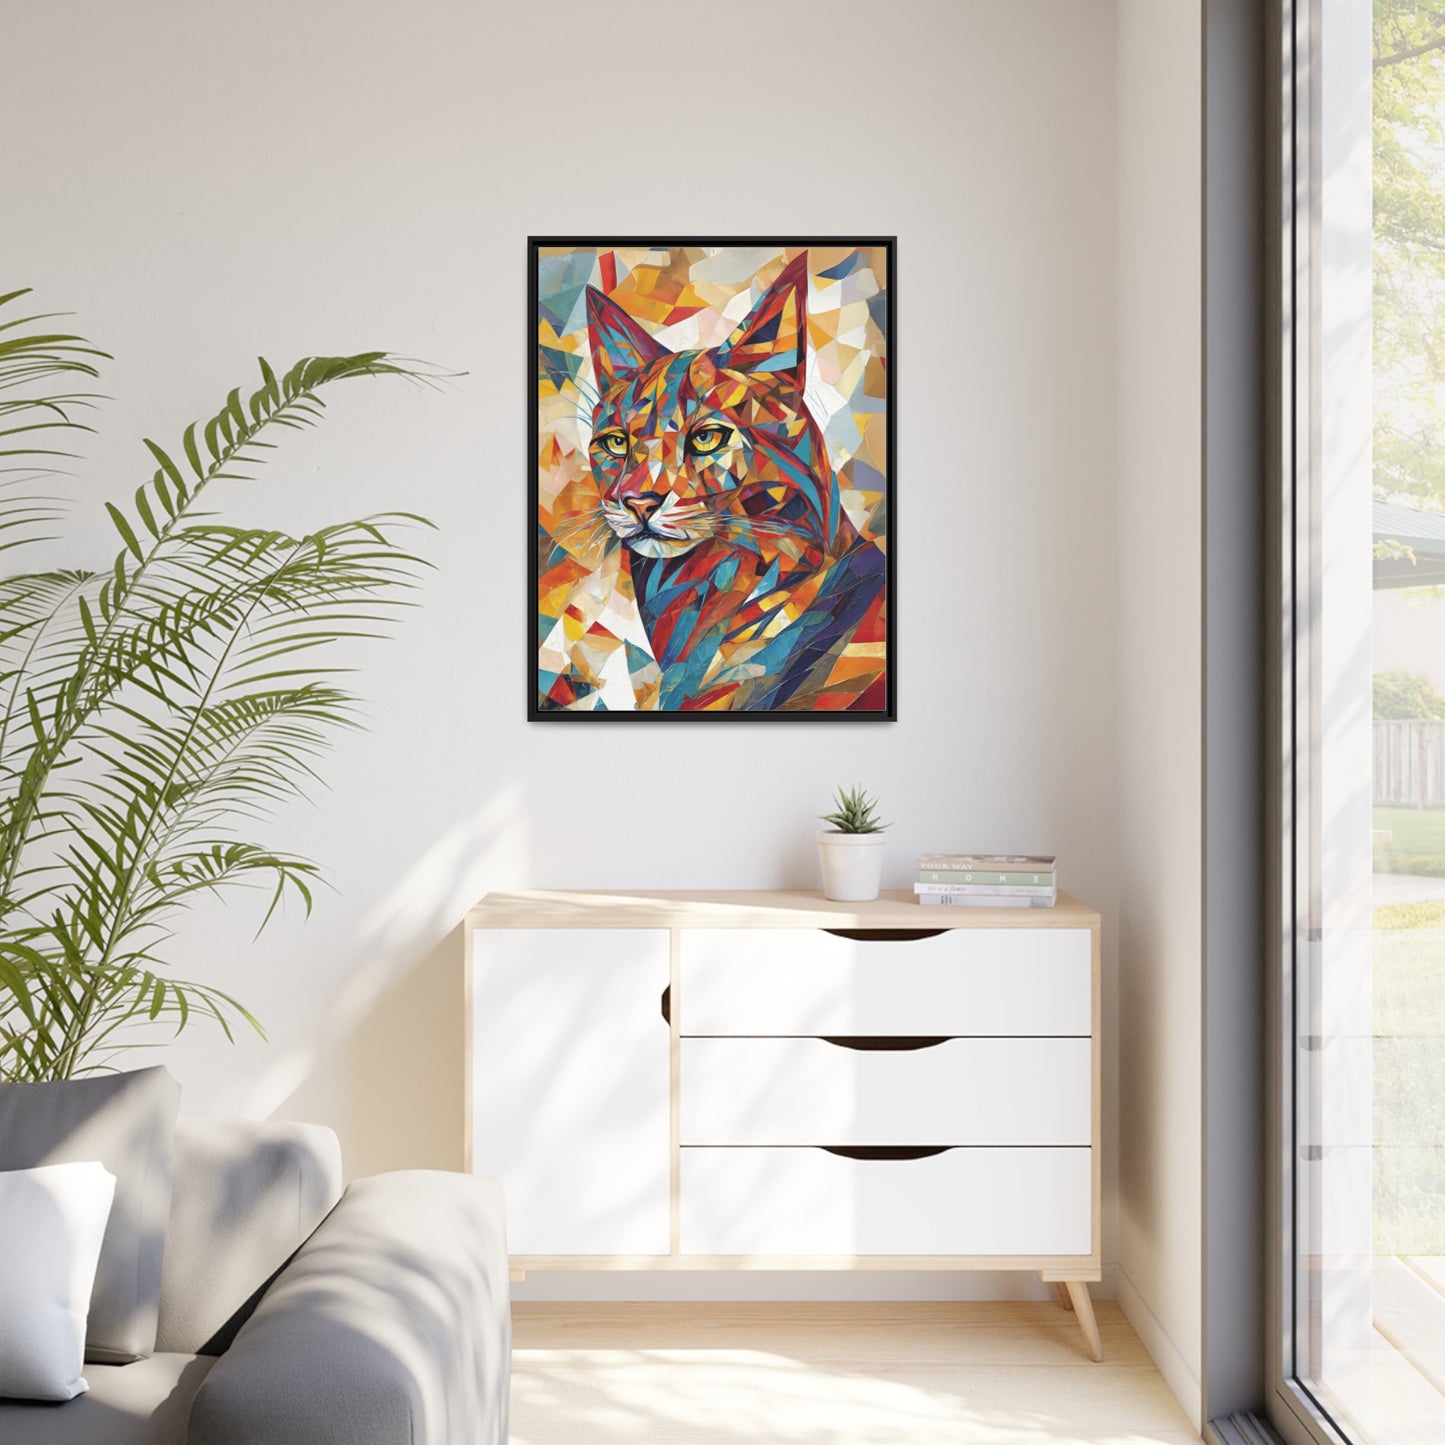 Vibrant Geometric Cat Canvas Print, Wall Art Canvas, Home Decor, Wall Decor, Wall Art, Abstract Art, Vibrant Colors, Cat artwork